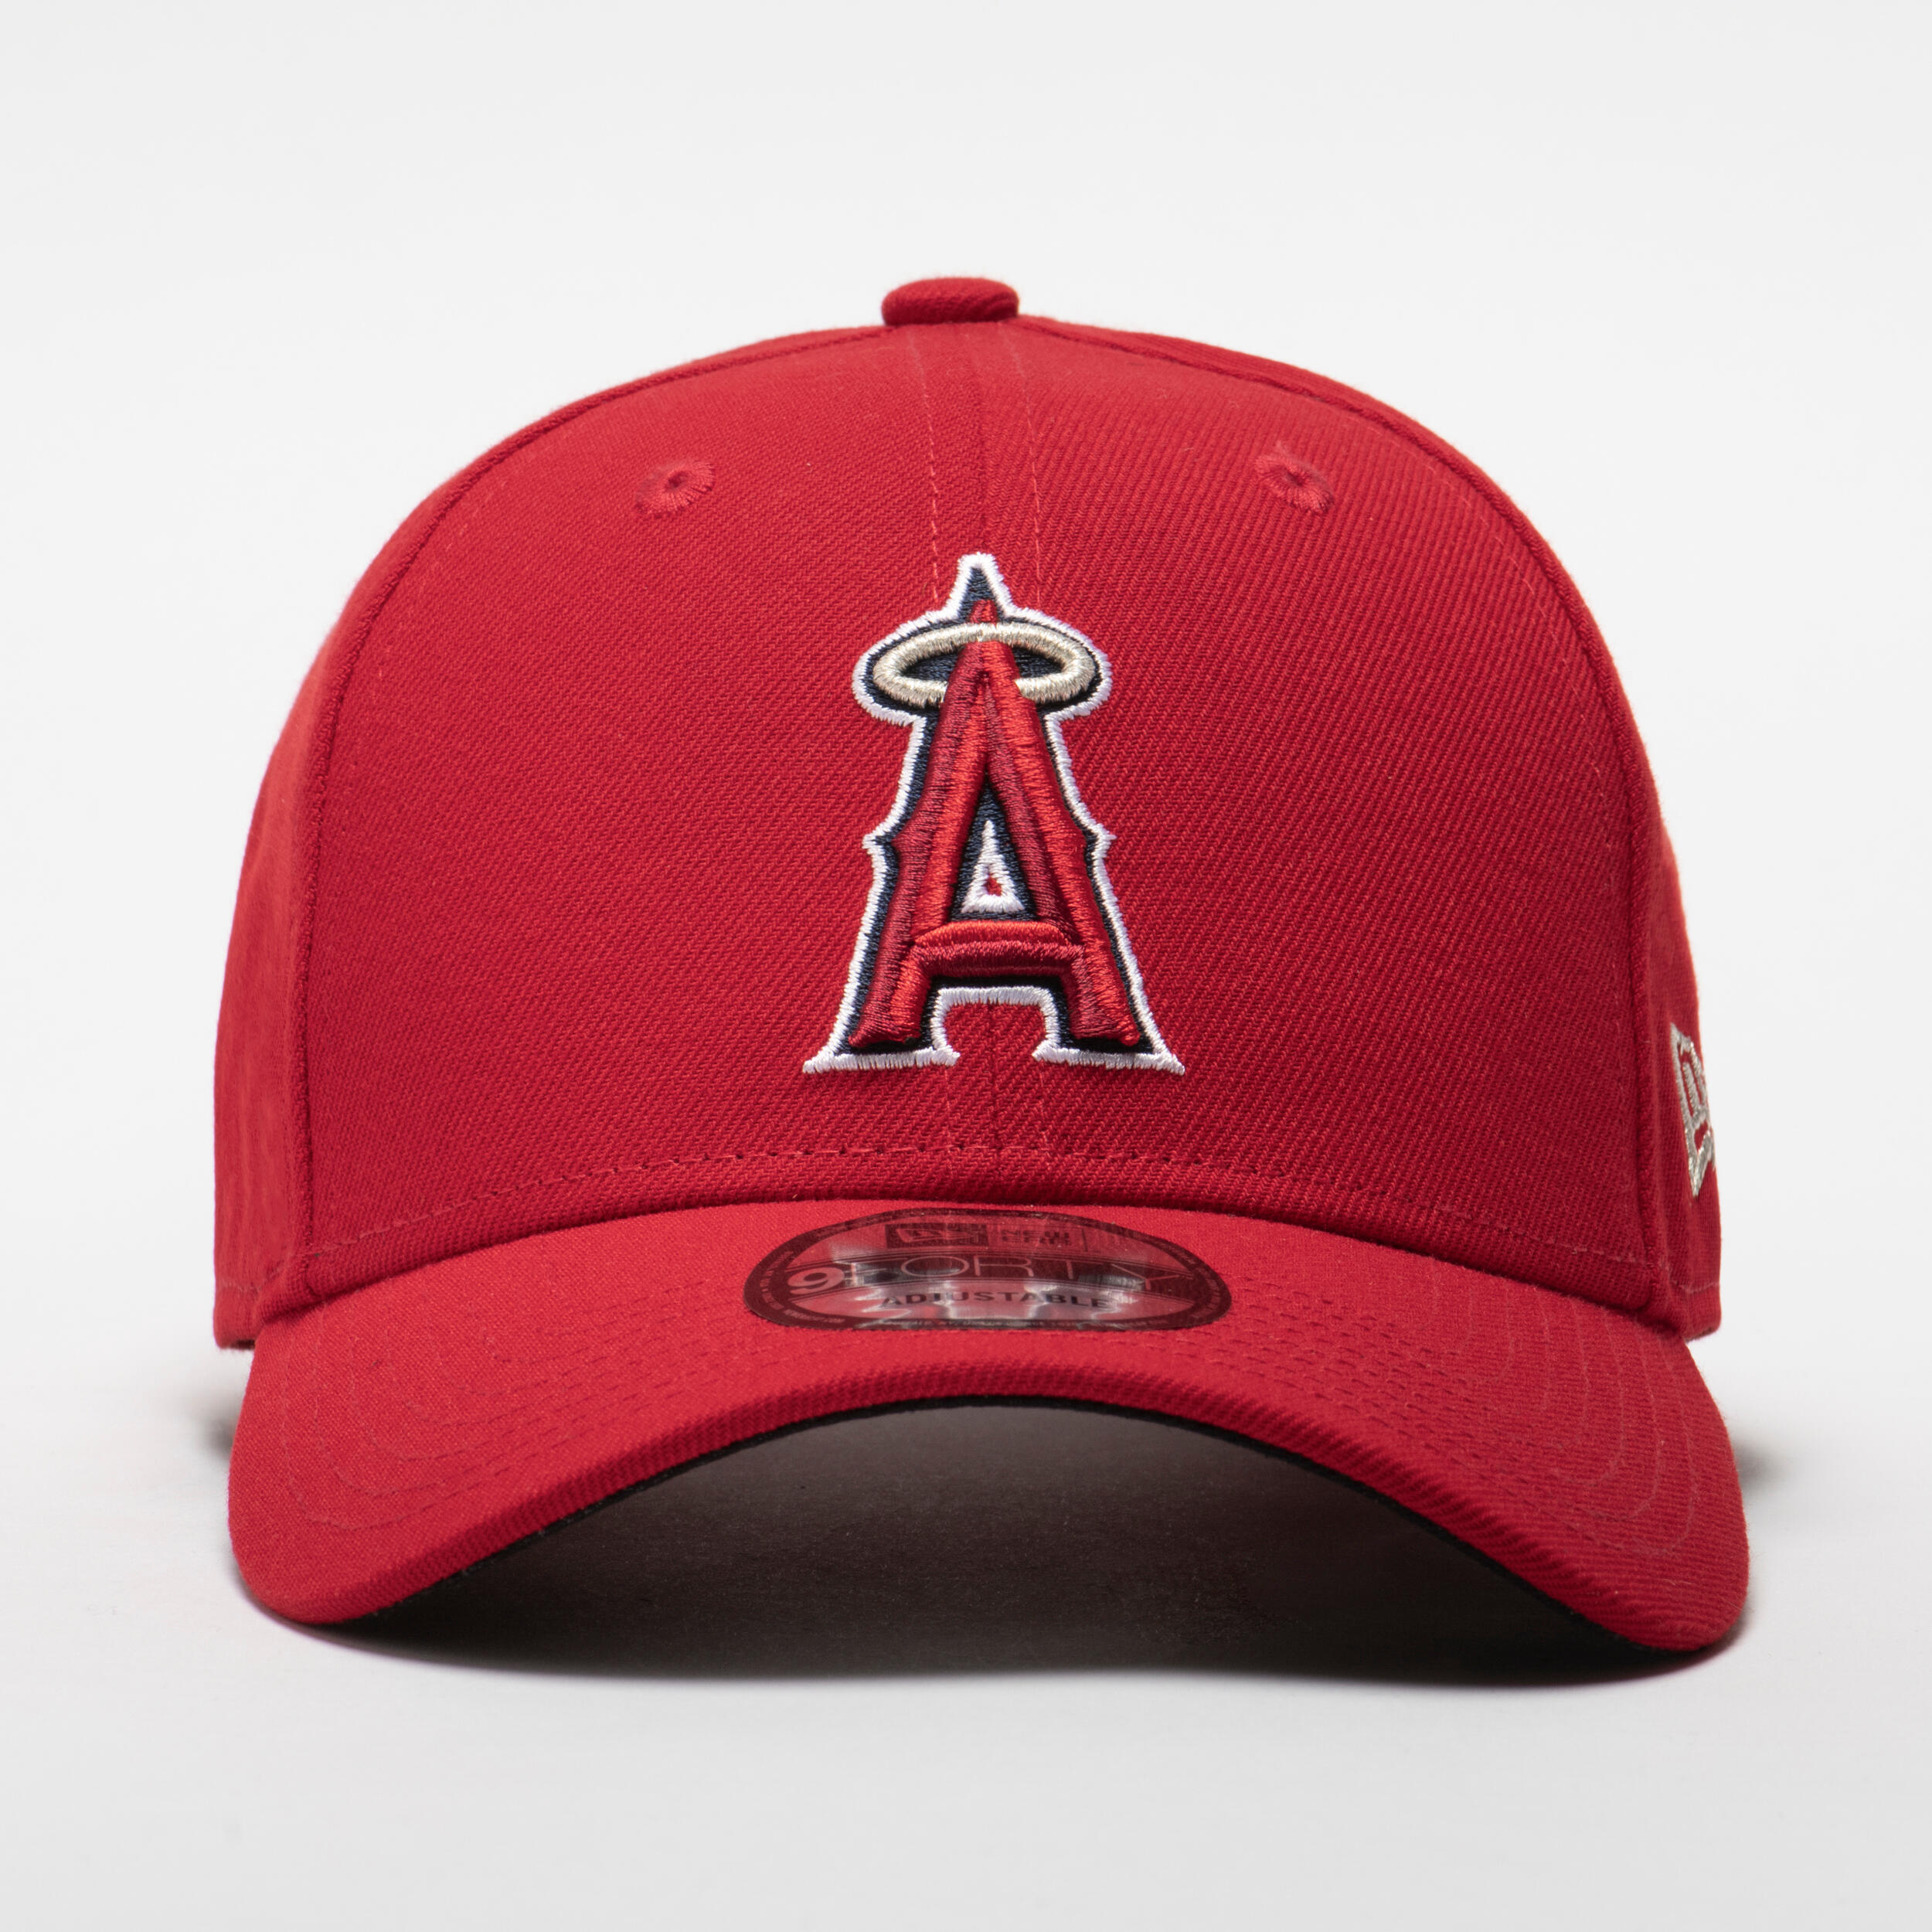 Organizer Portatile per 10 Cappelli da Baseball Surenhap Porta Cappelli da Baseball 